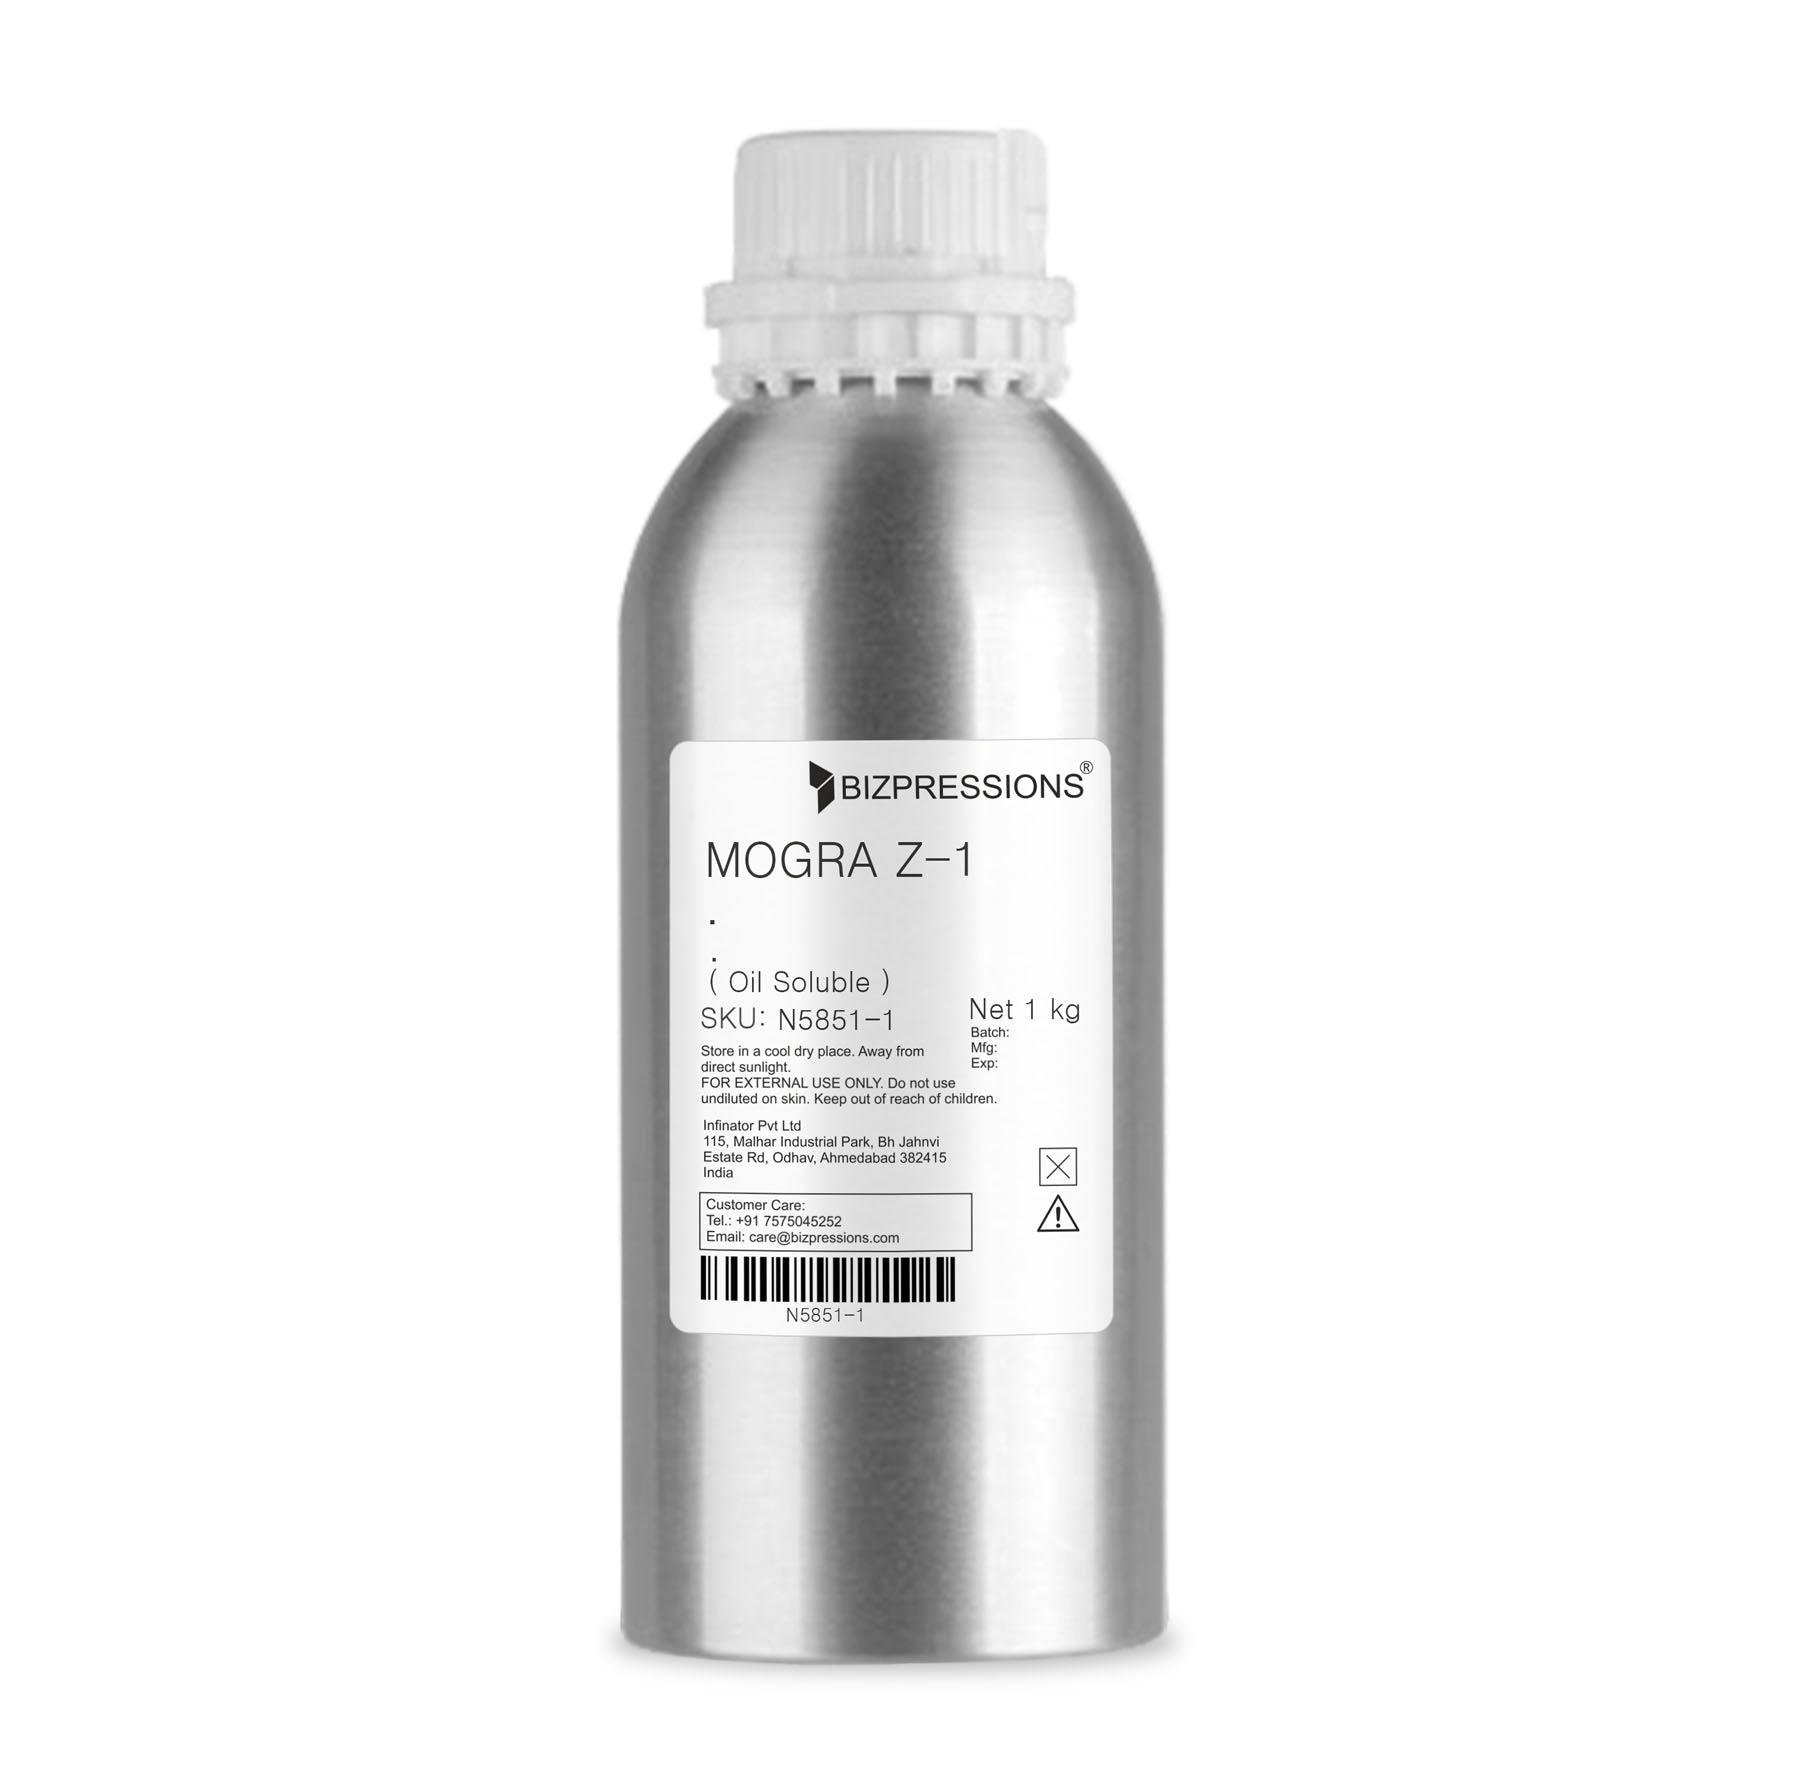 MOGRA Z-1 - Fragrance ( Oil Soluble ) - 1 kg